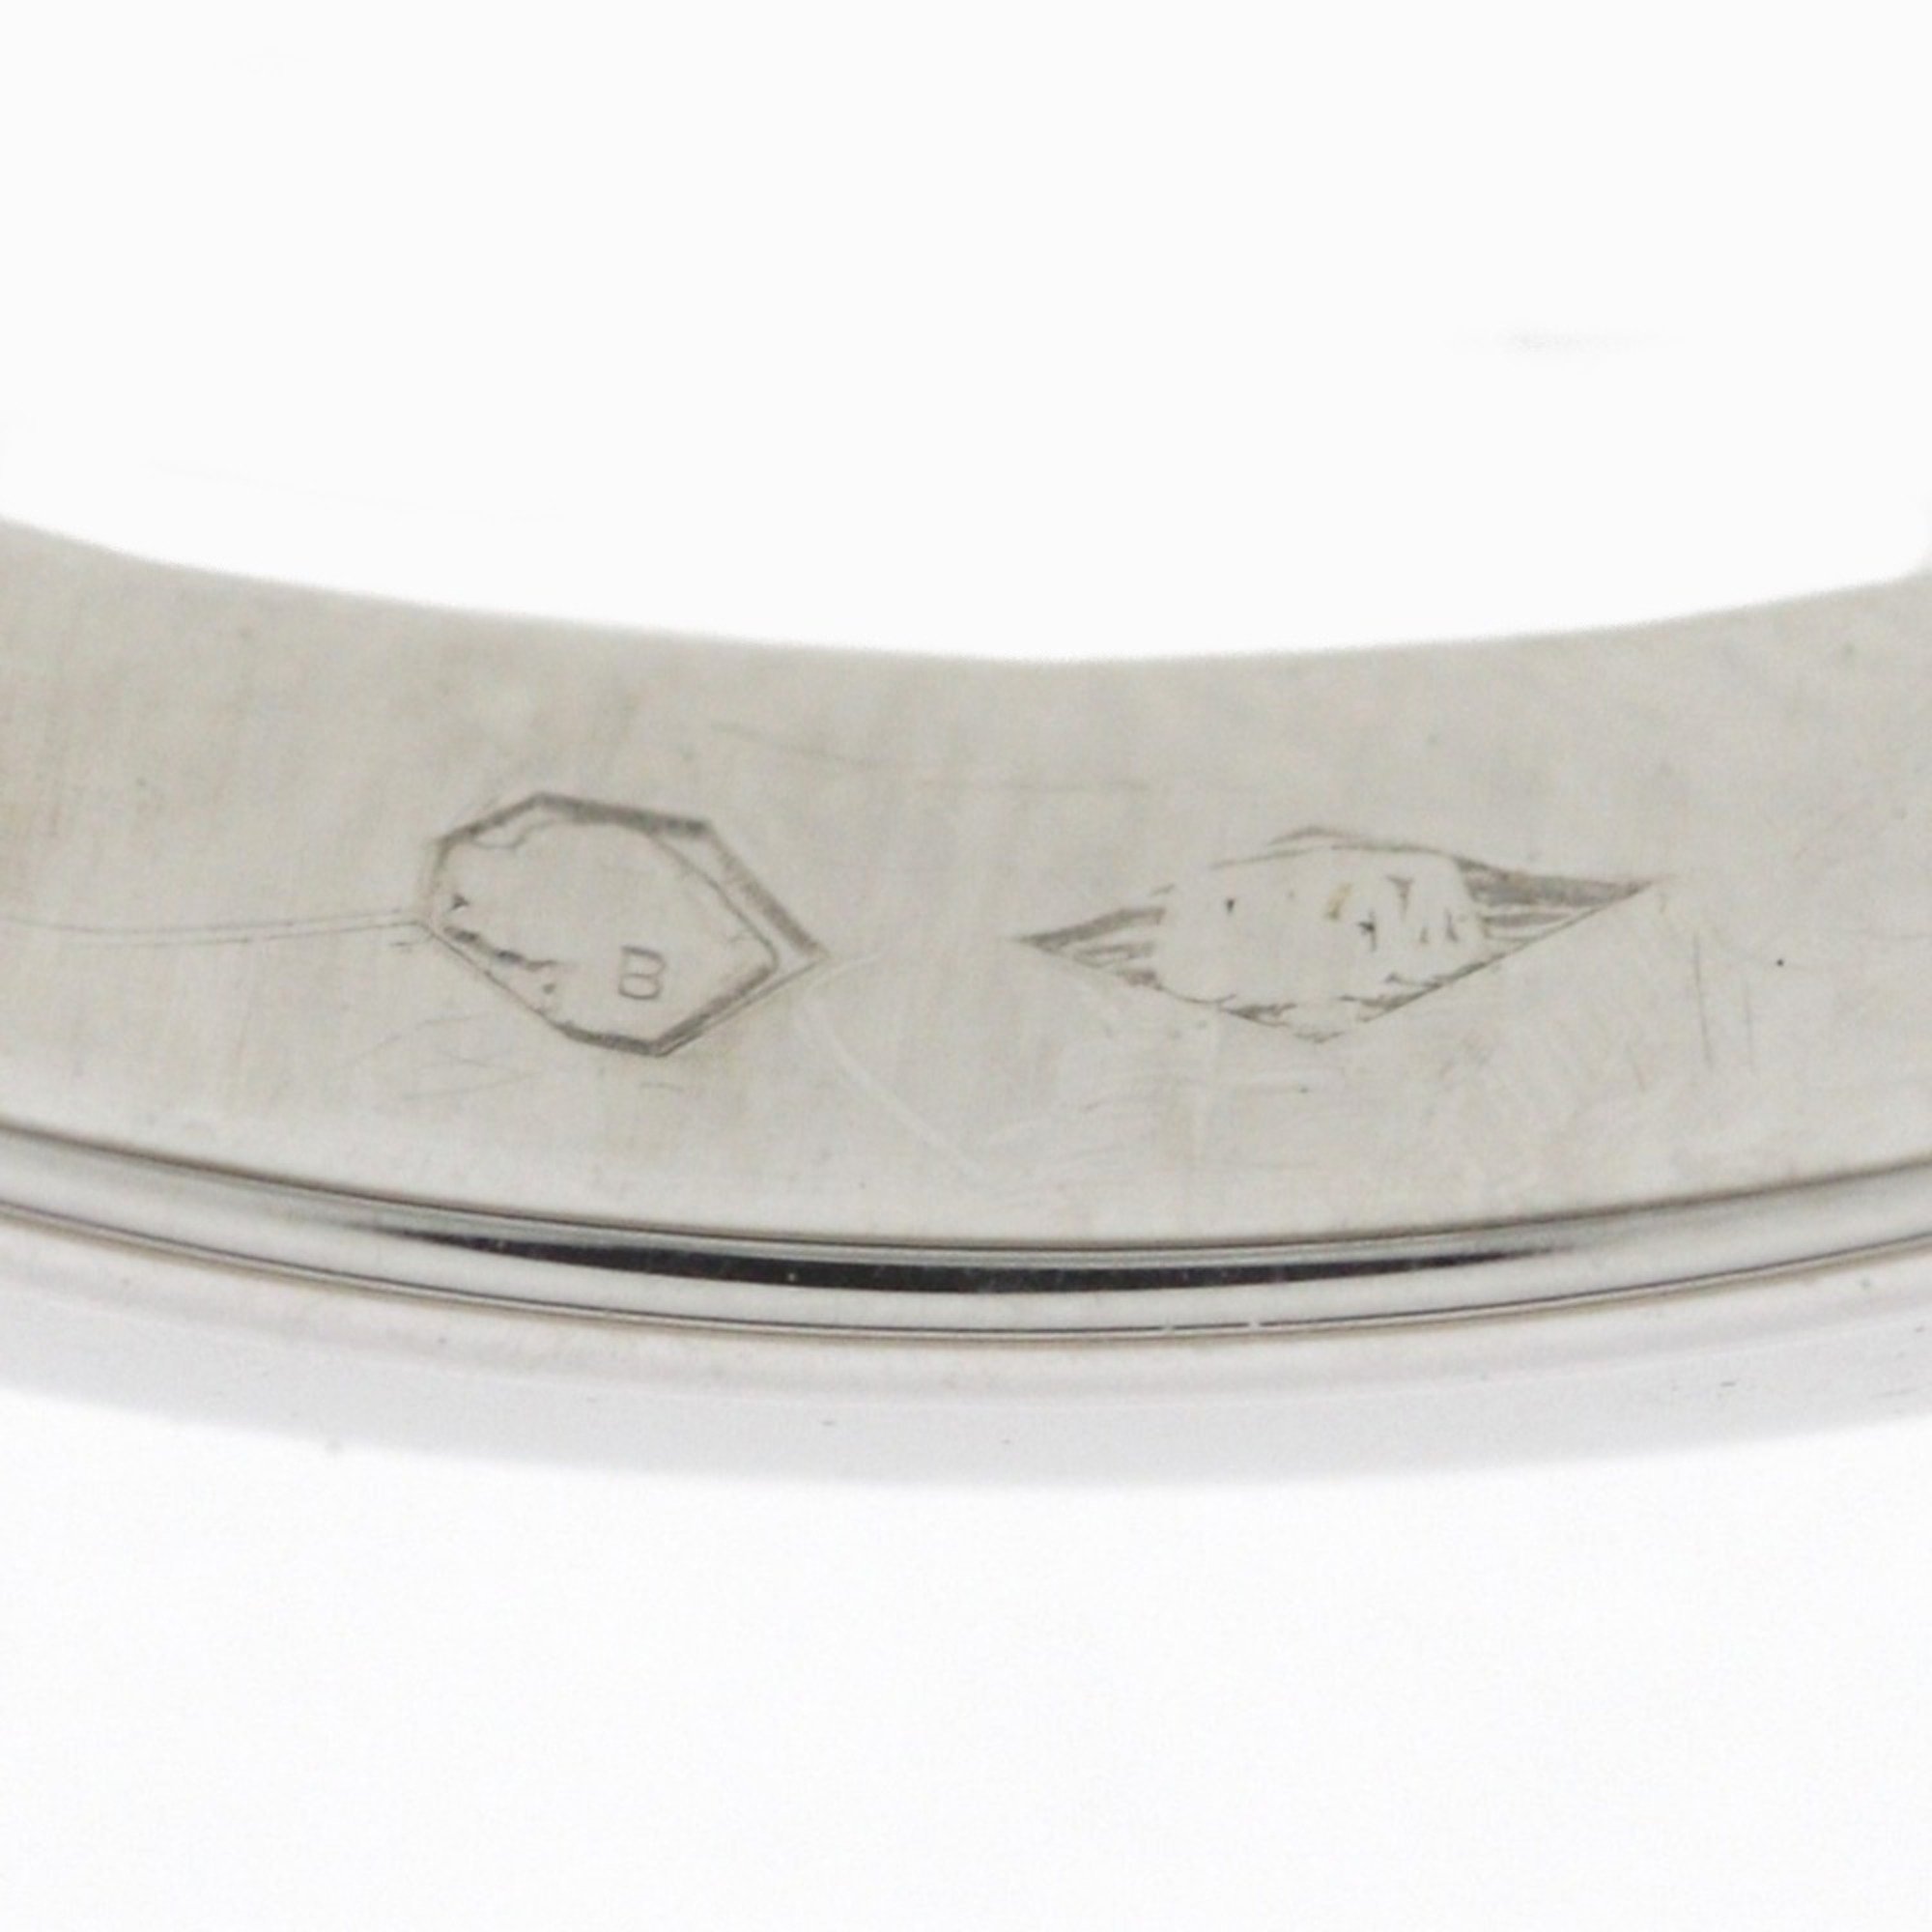 Cartier Knife Edge Ring, Size 7, Pt950 Platinum, Approx. 3.5g, Edge, Women's